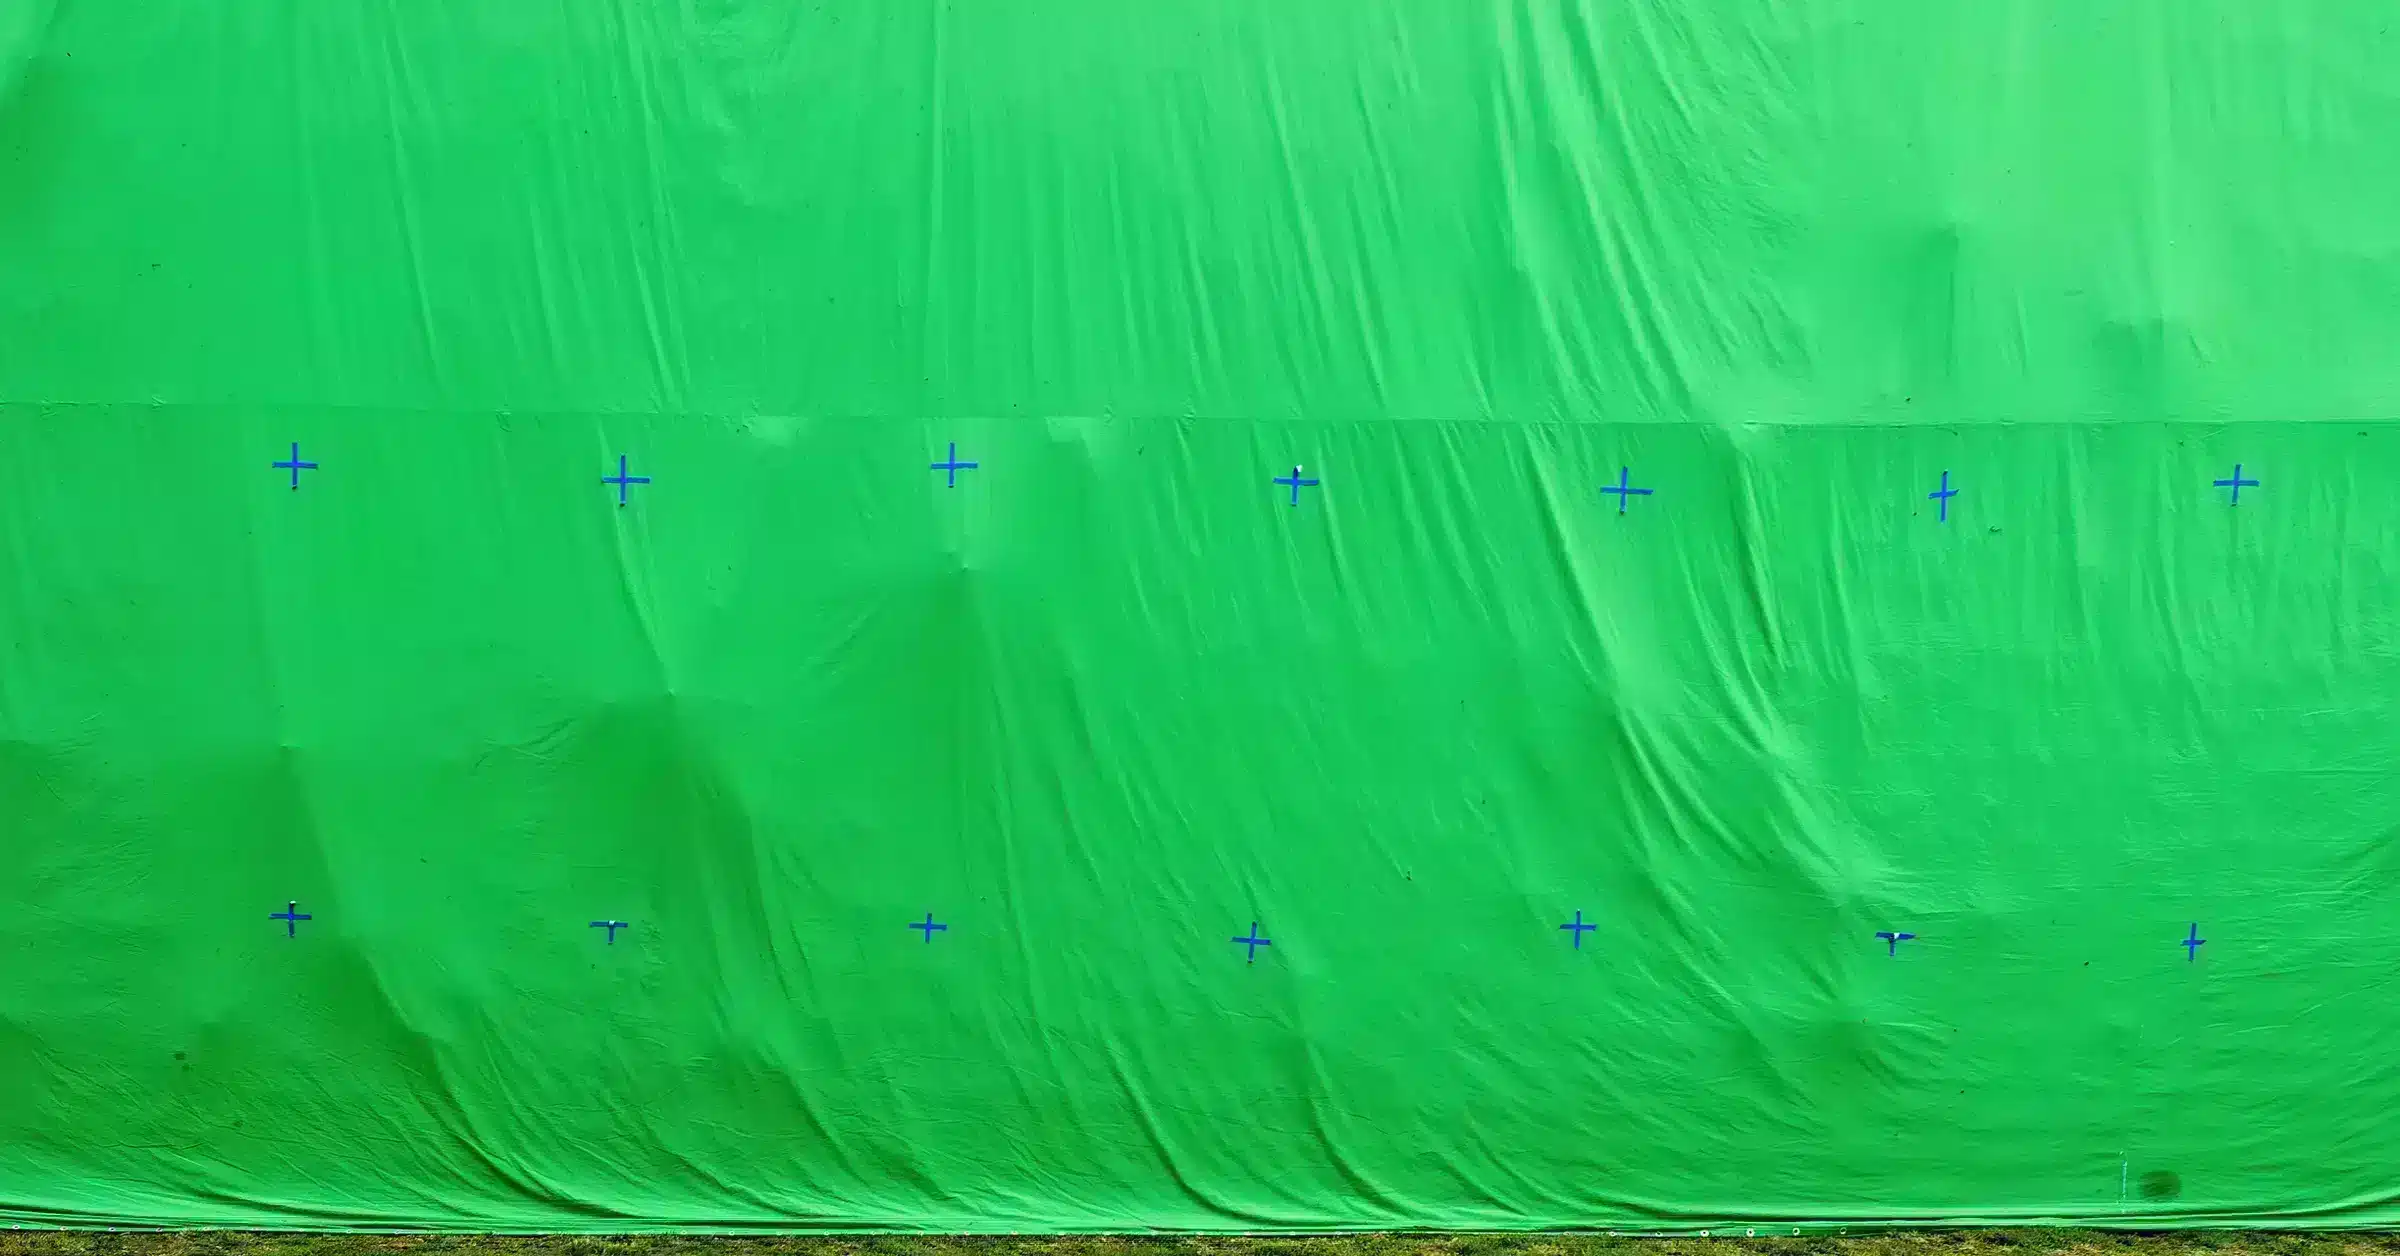 Tech Green Fabric Backdrop